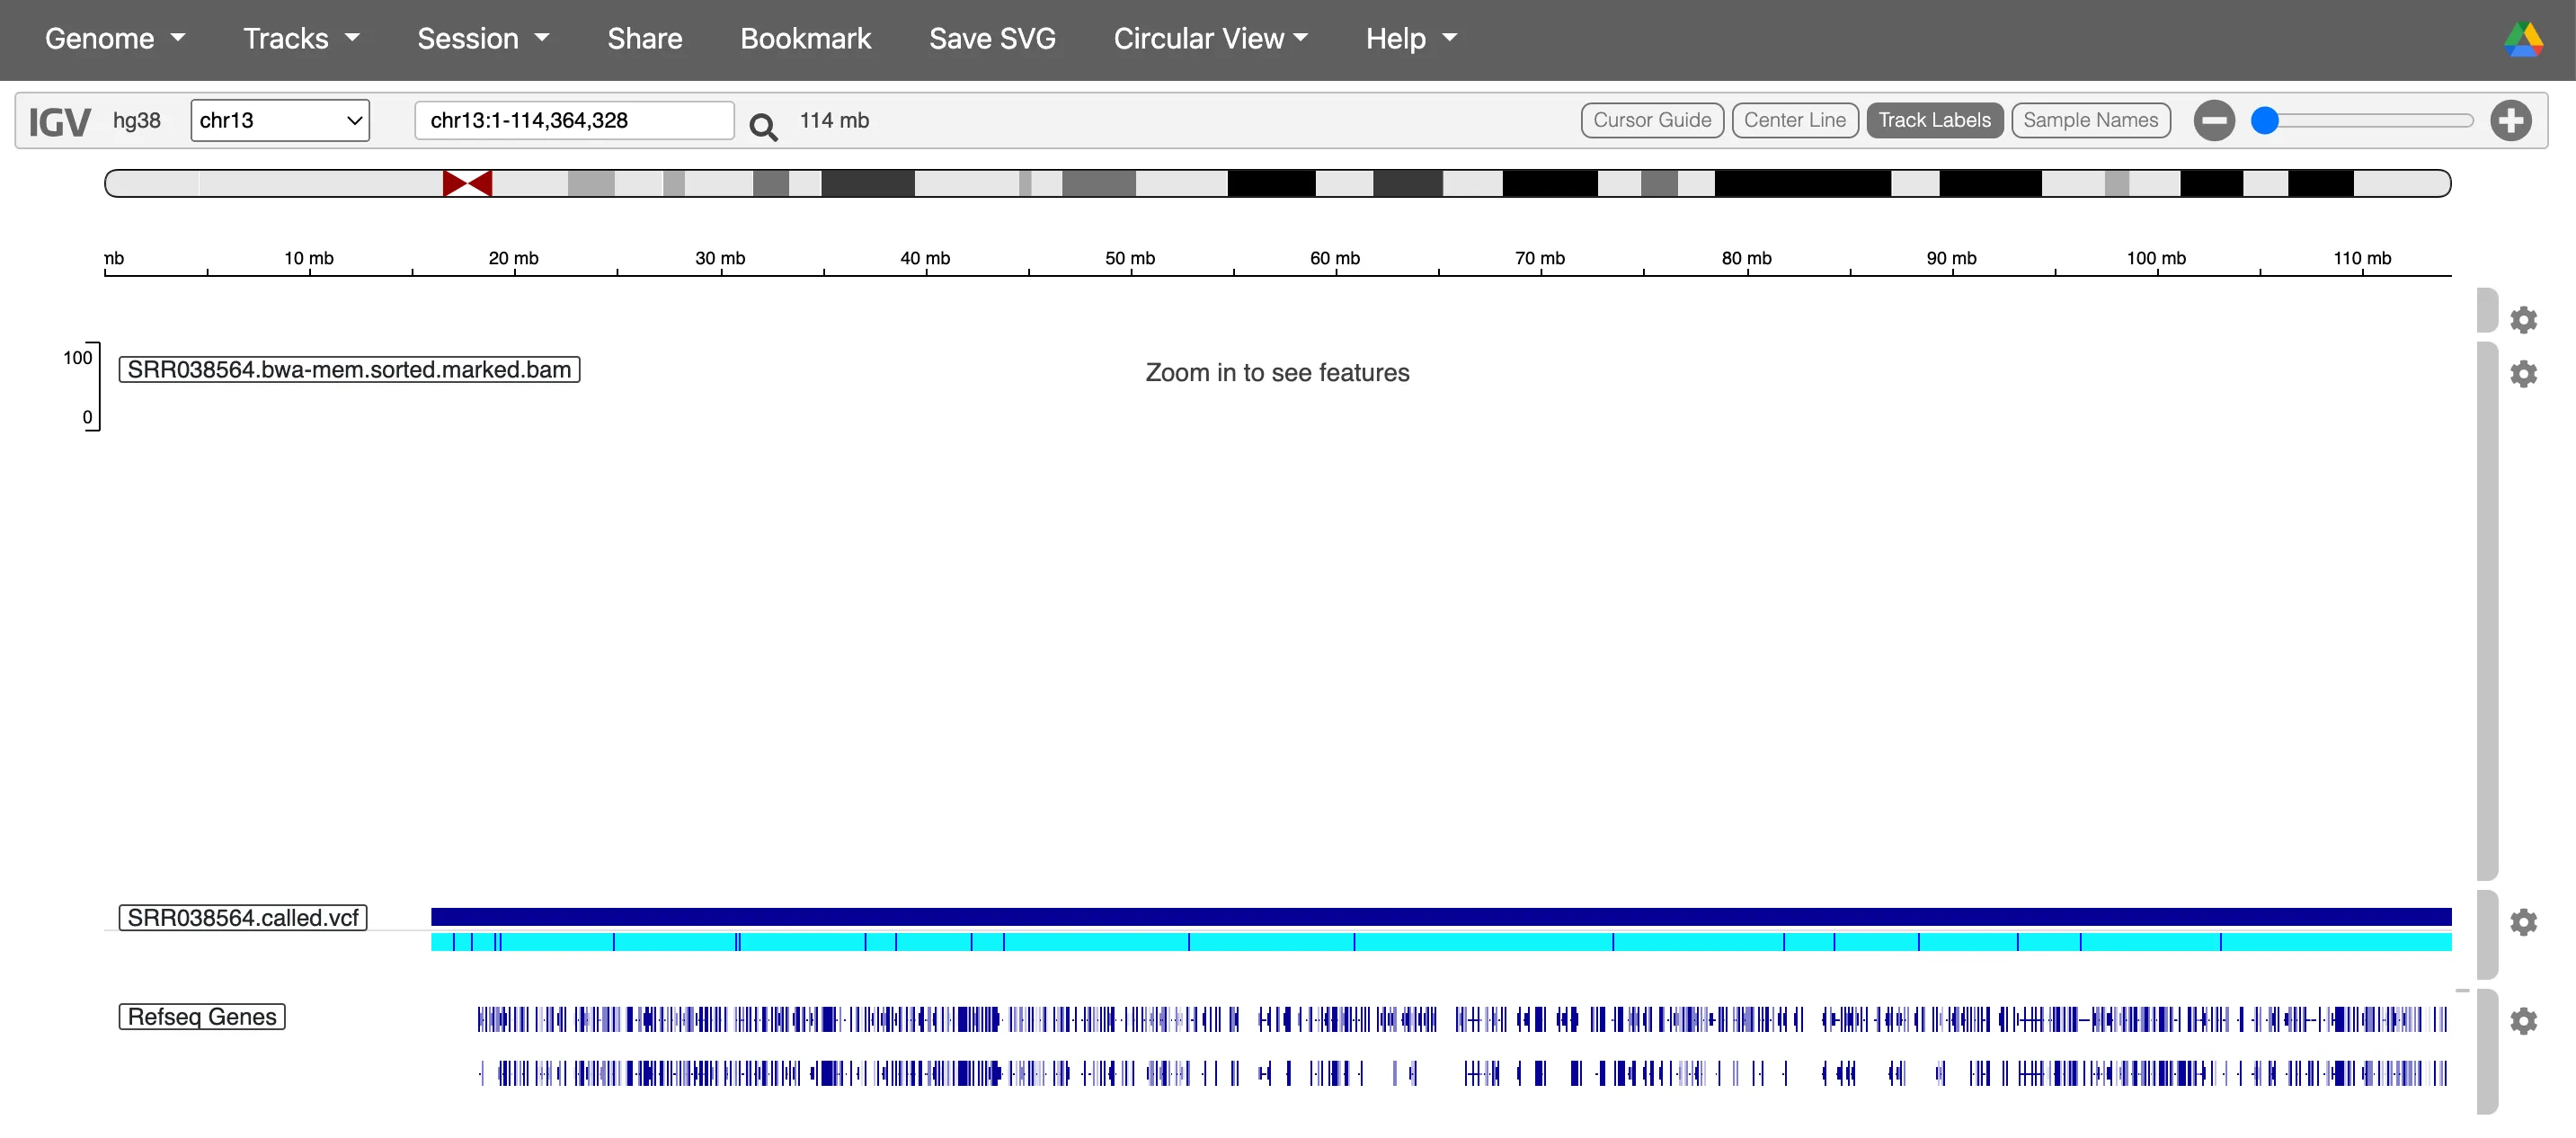 Inspecting chromosome 13 in IGV